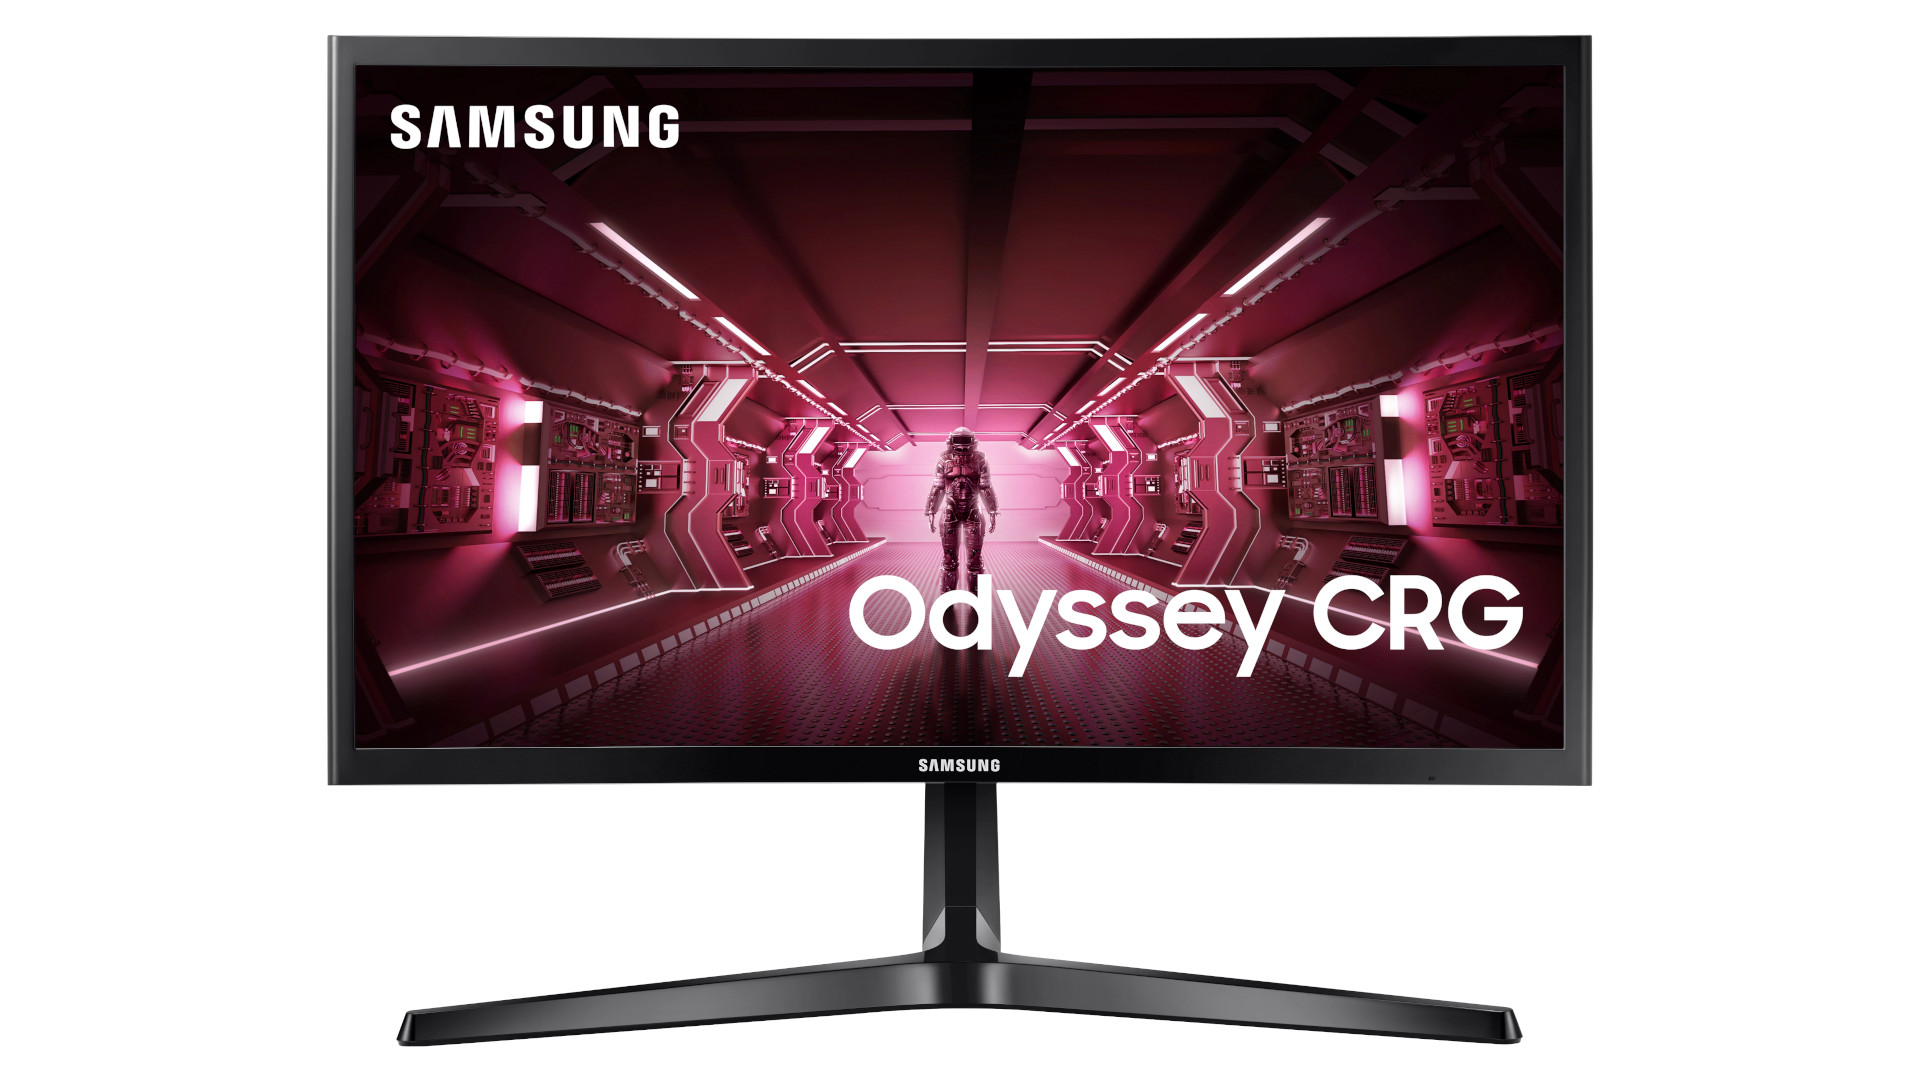 Samsung CRG5 1080p 144Hz მოსახვევი სათამაშო მონიტორი 46%-იანი ფასდაკლებაა Amazon-ზე